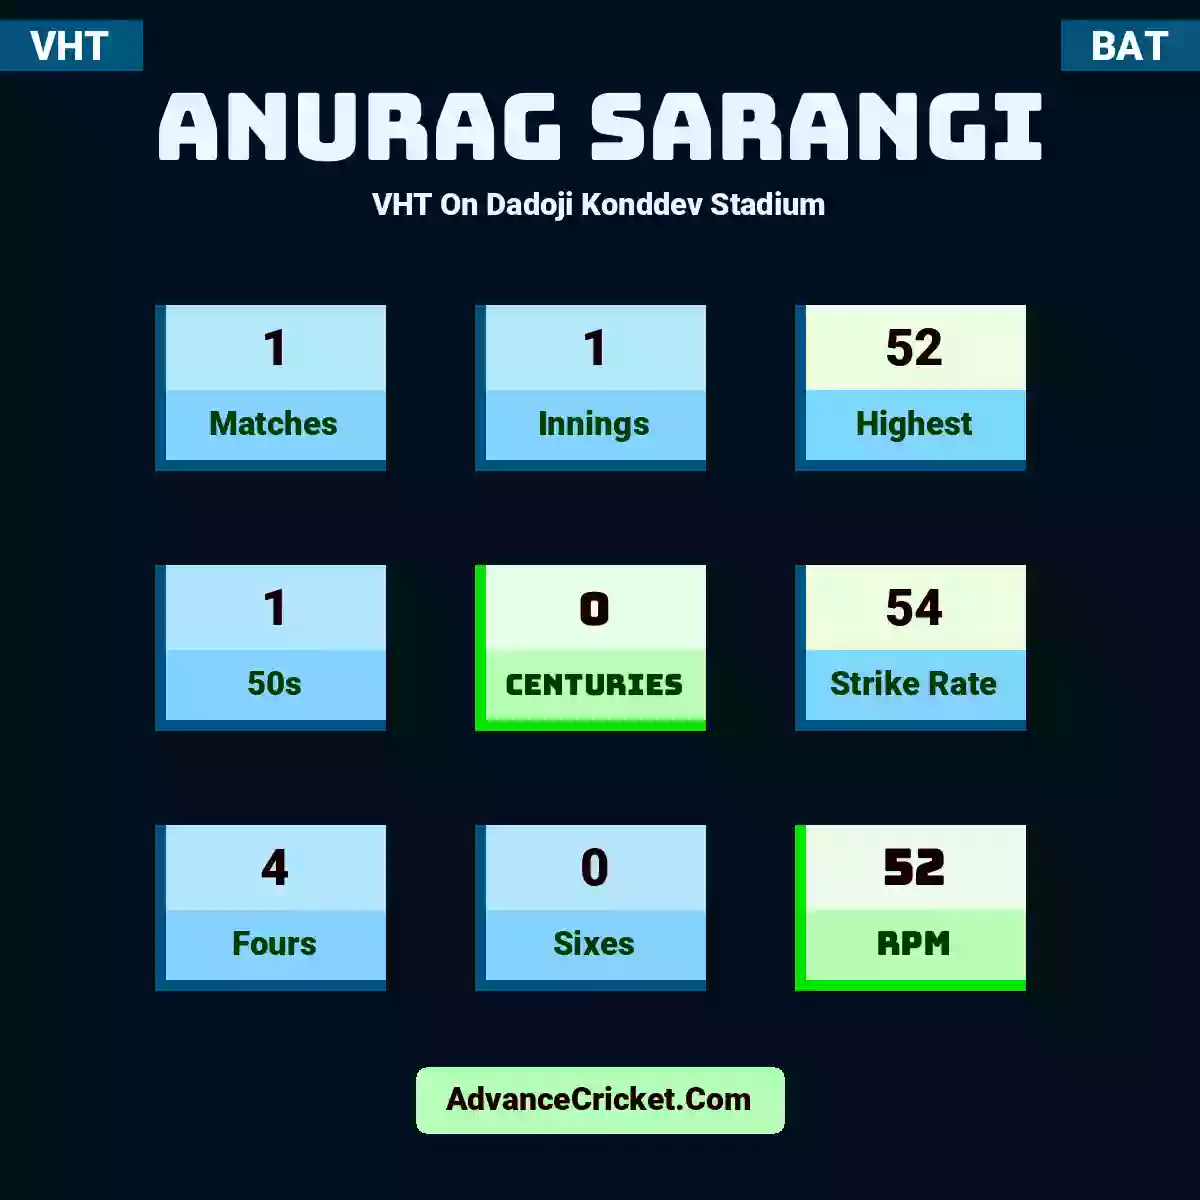 Anurag Sarangi VHT  On Dadoji Konddev Stadium, Anurag Sarangi played 1 matches, scored 52 runs as highest, 1 half-centuries, and 0 centuries, with a strike rate of 54. A.Sarangi hit 4 fours and 0 sixes, with an RPM of 52.